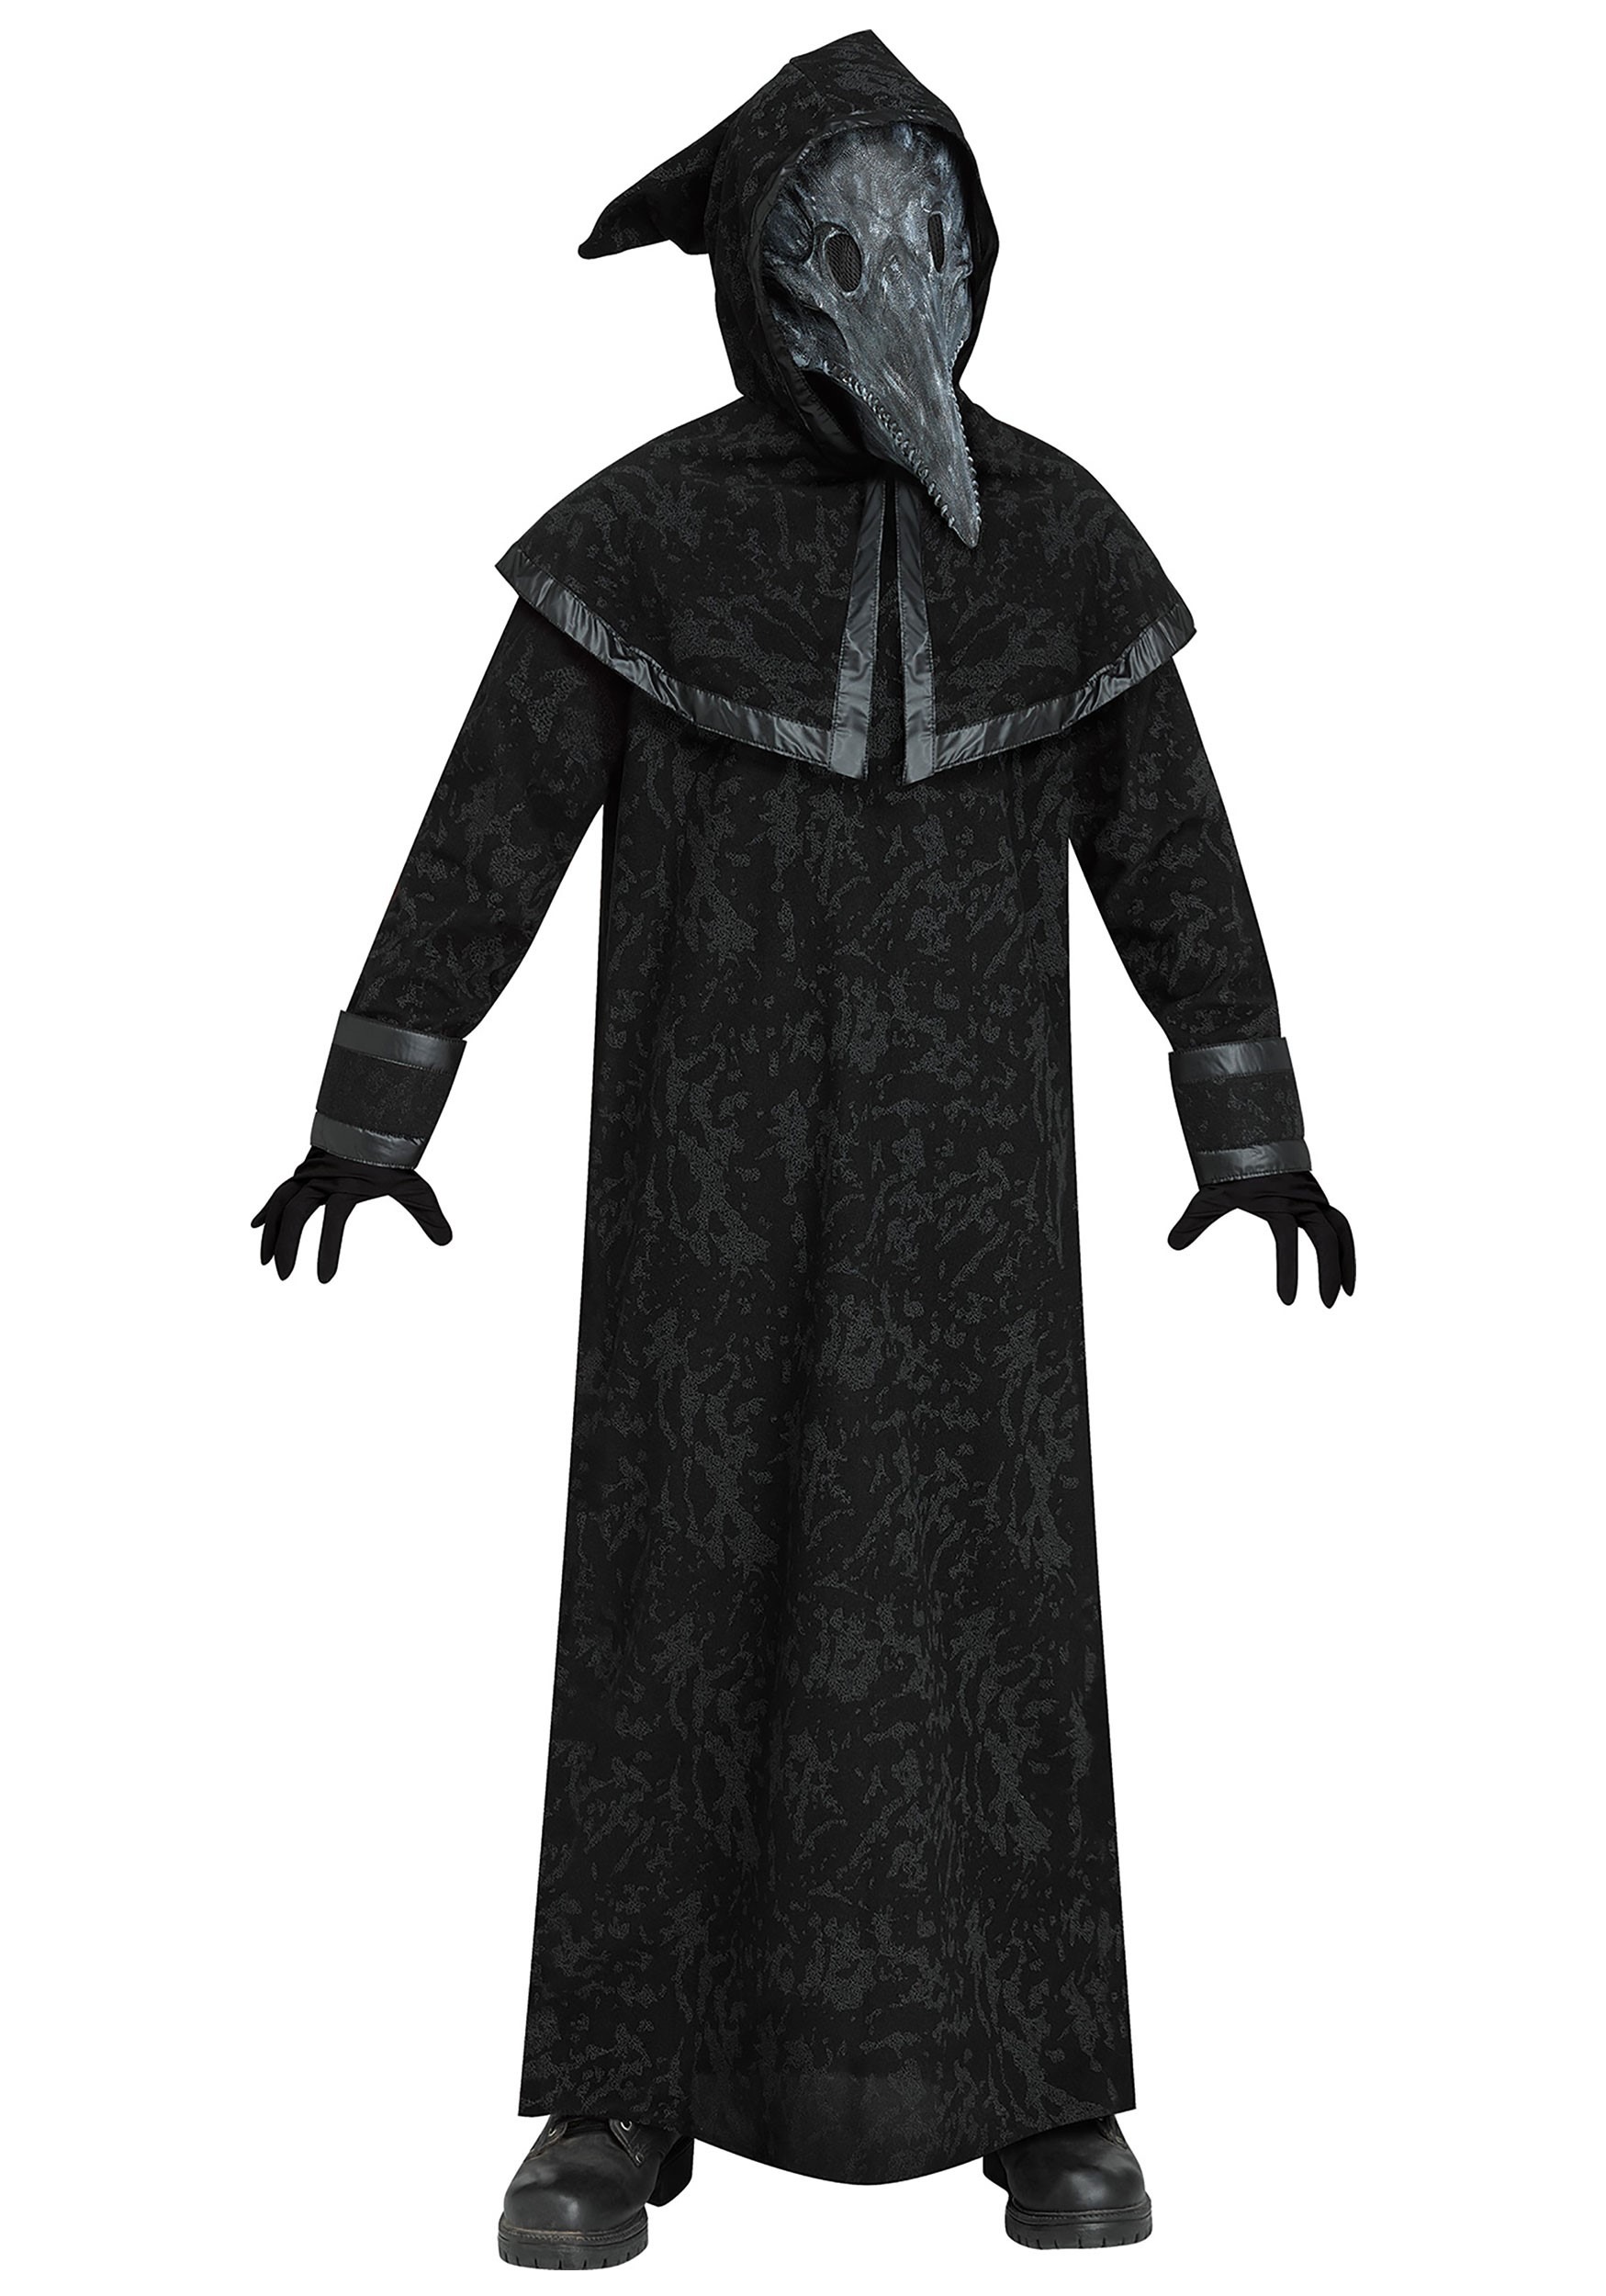 Photos - Fancy Dress Fun World Plague Doctor Costume for Kids Black FU134872